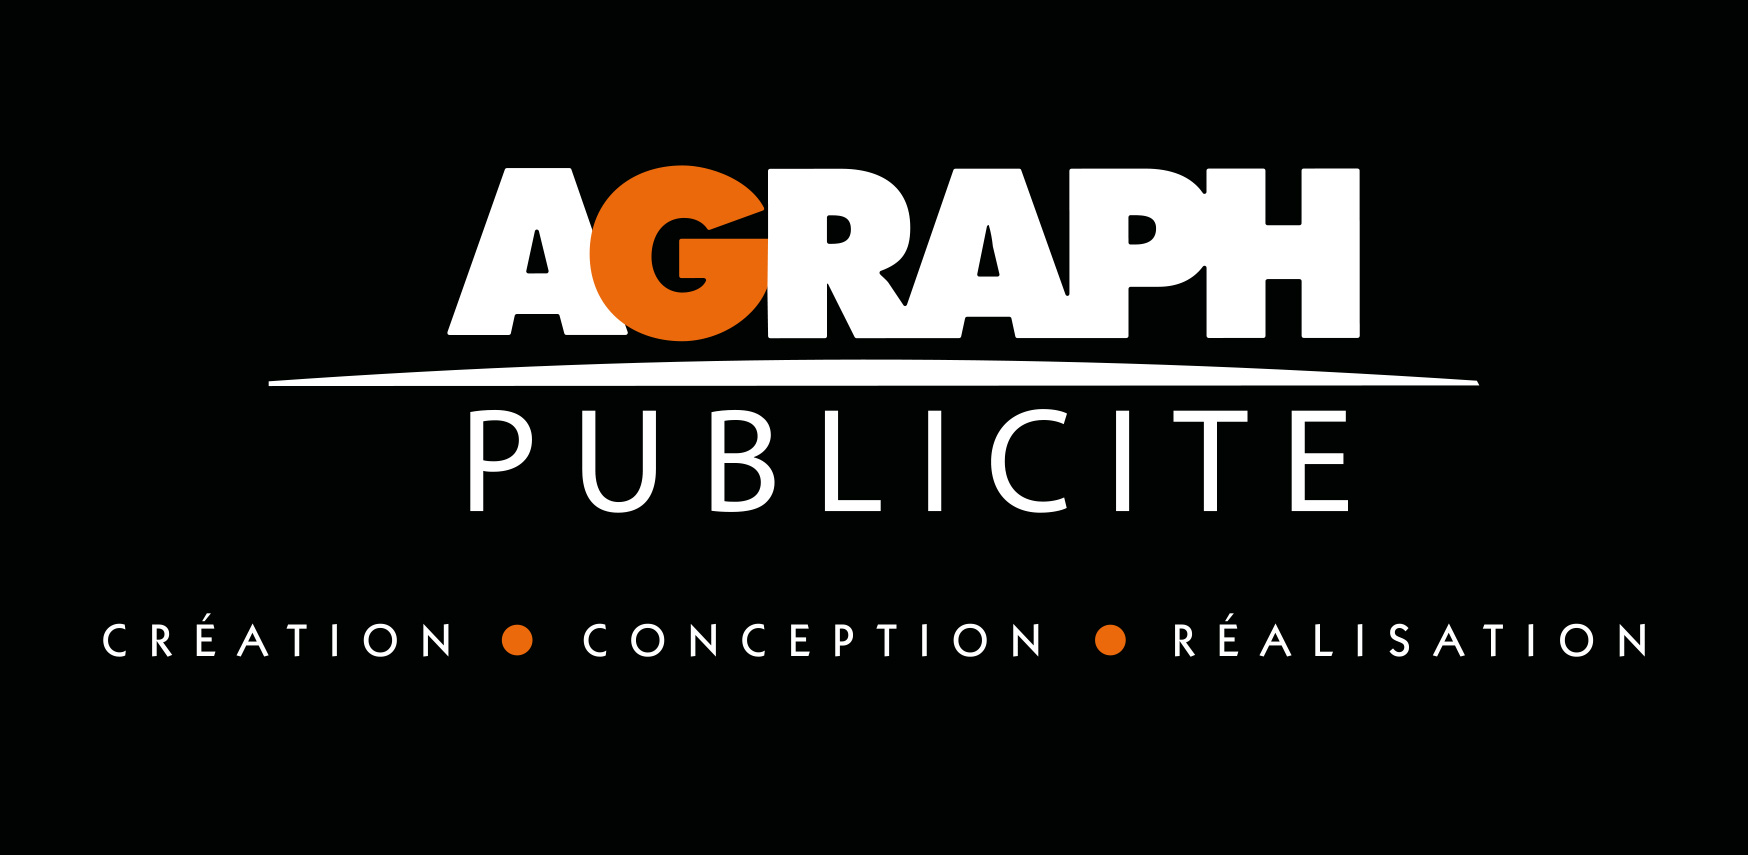 AGRAPH PUBLICITE